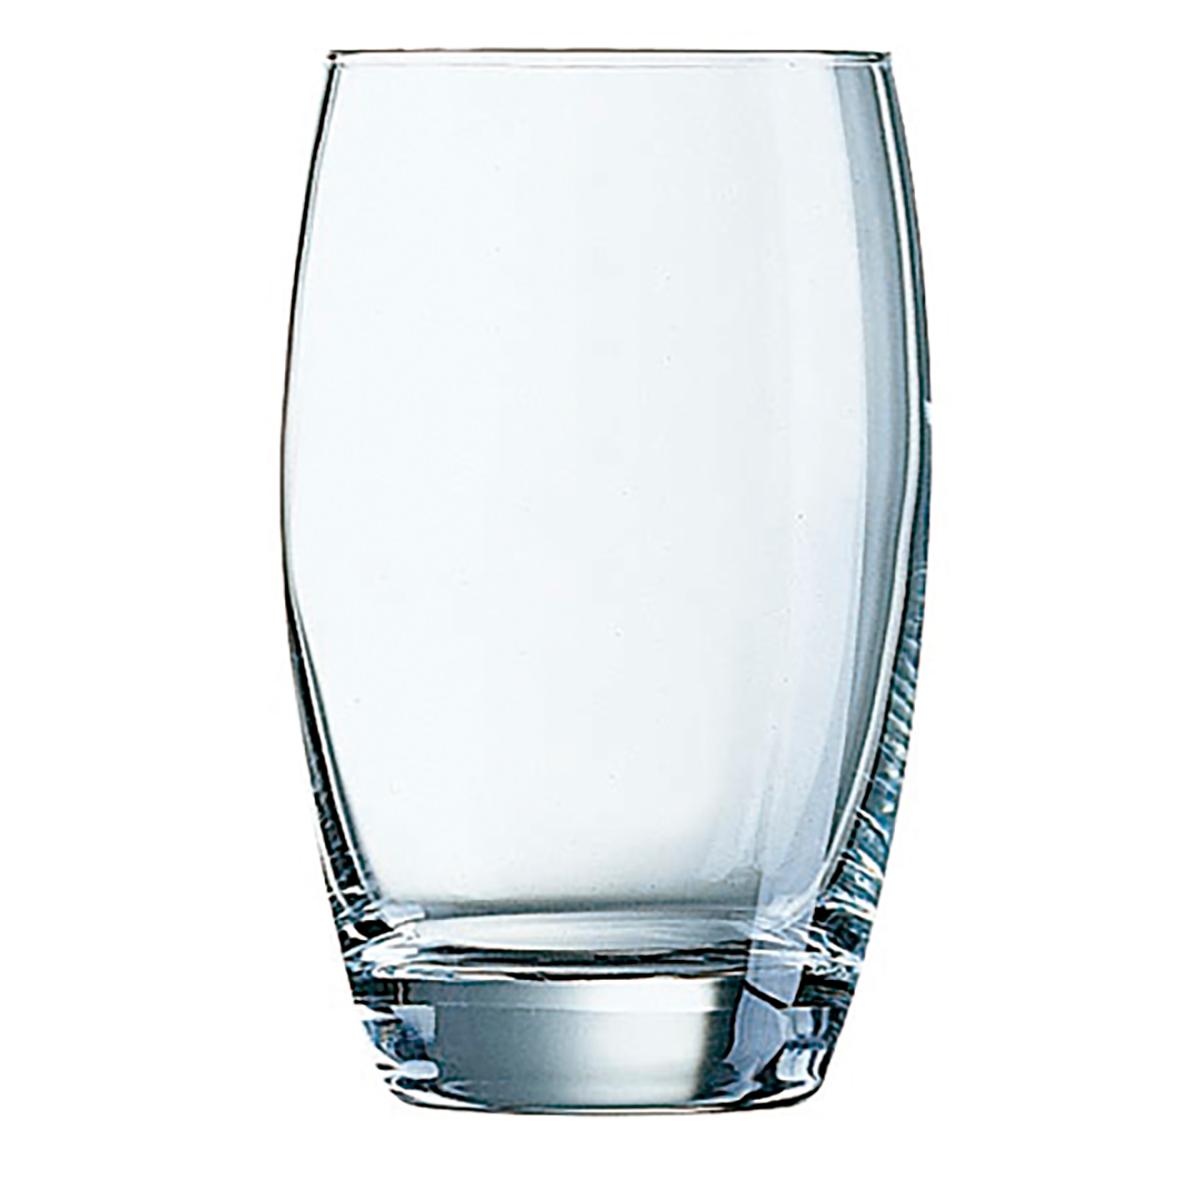 Arcoroc - ARCOROC SALTO Caja 6 Vasos Altos Vidrio 35CL Transparente Brillo Fabricado en Francia , Facil de limpiar Reciclable , Ecológico , 100% higiénico , No poroso , Material 100% saludable , Larga duración No Apto Microondas , Apto Frigorífico 6 vasos altos 35